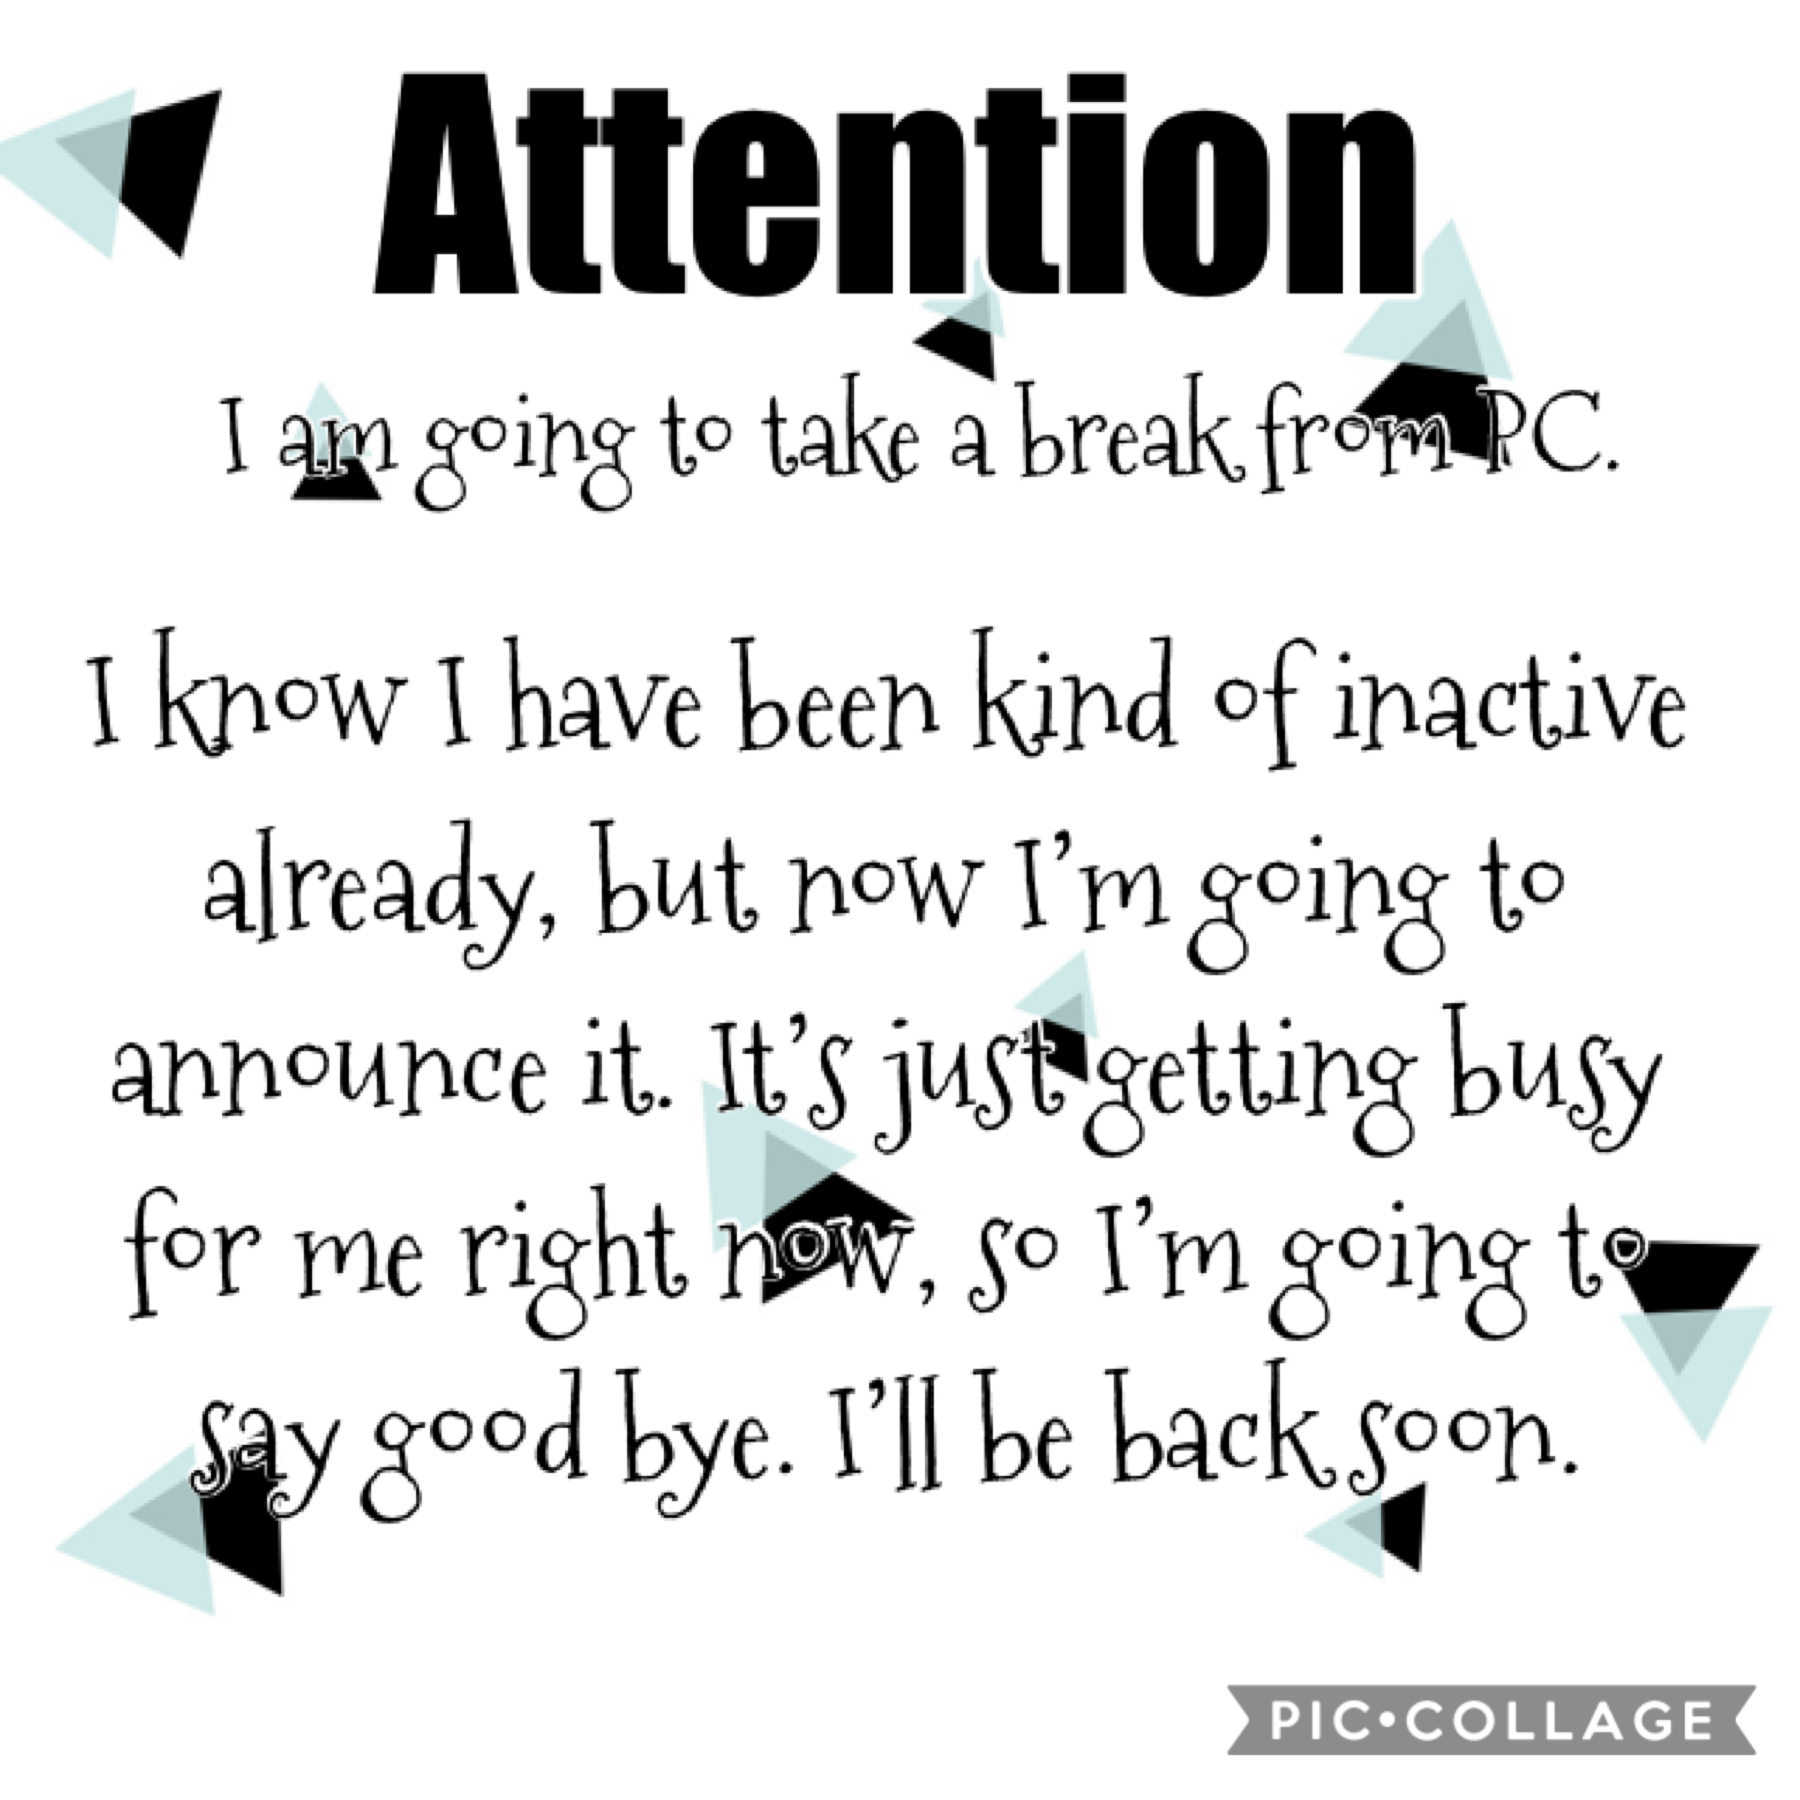 💖🌺Tap🌺💖
Sorry
I’ll be back!!